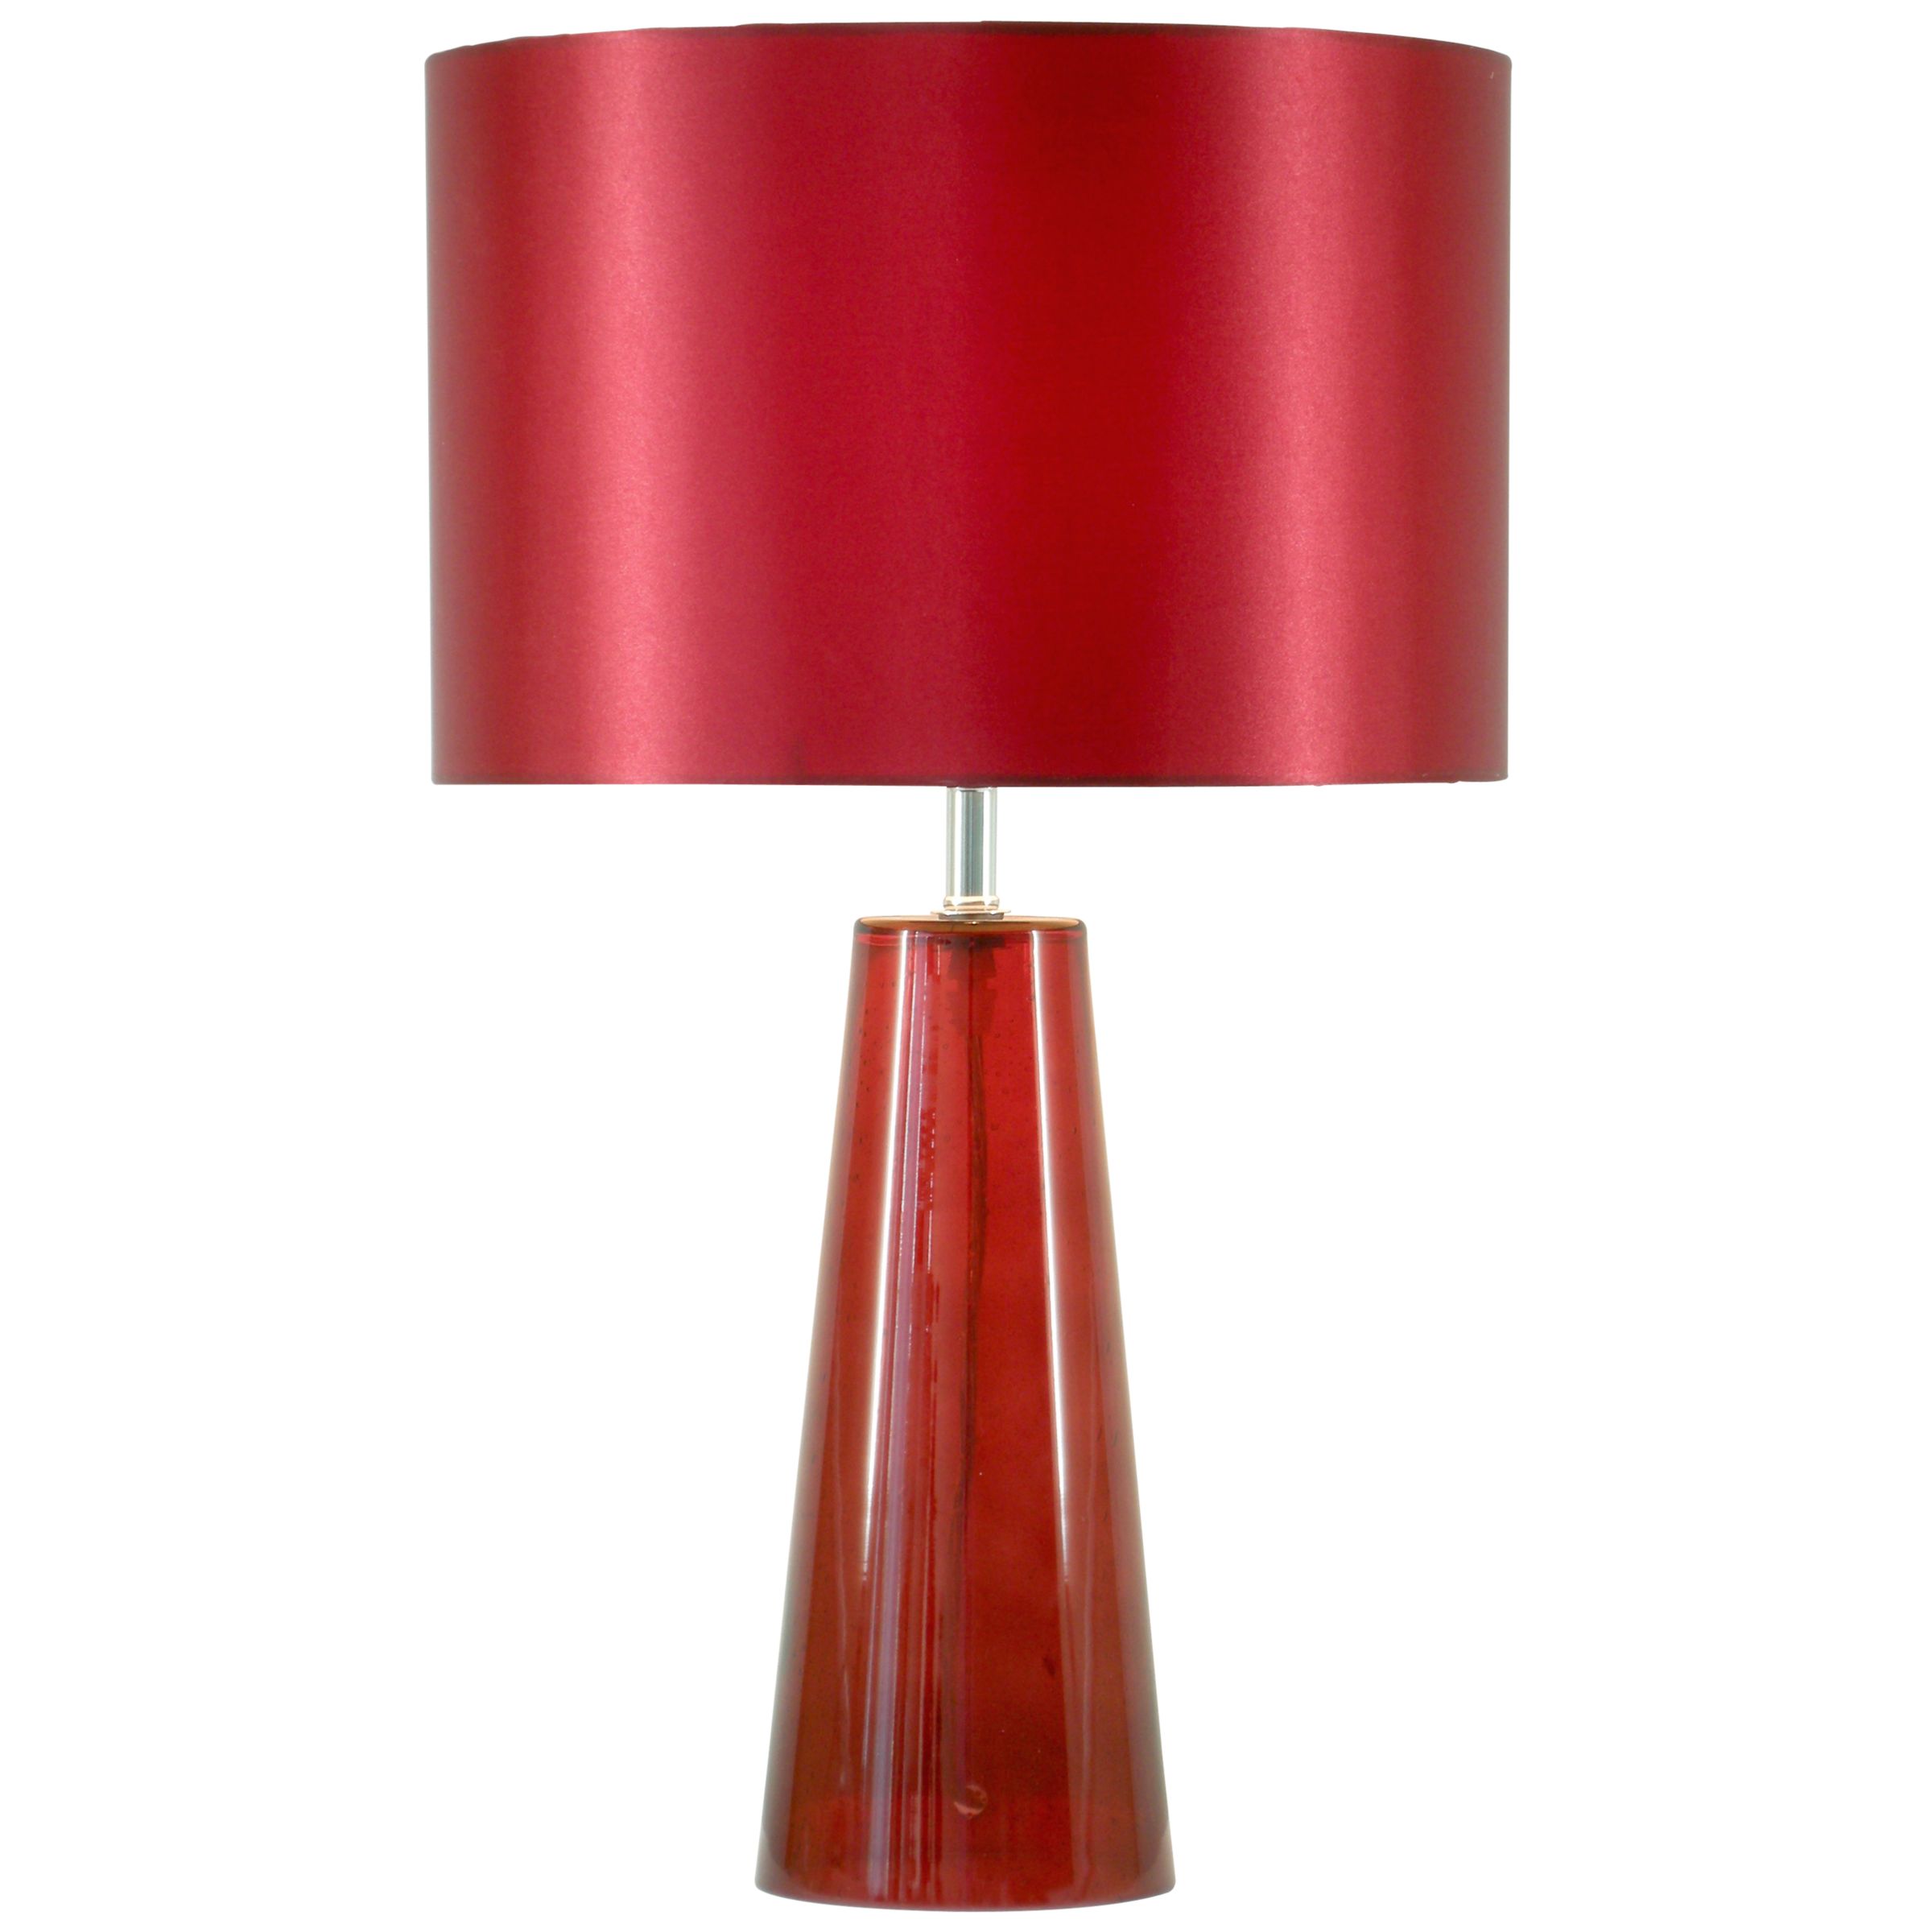 John Lewis Olivia Table Lamp, Red